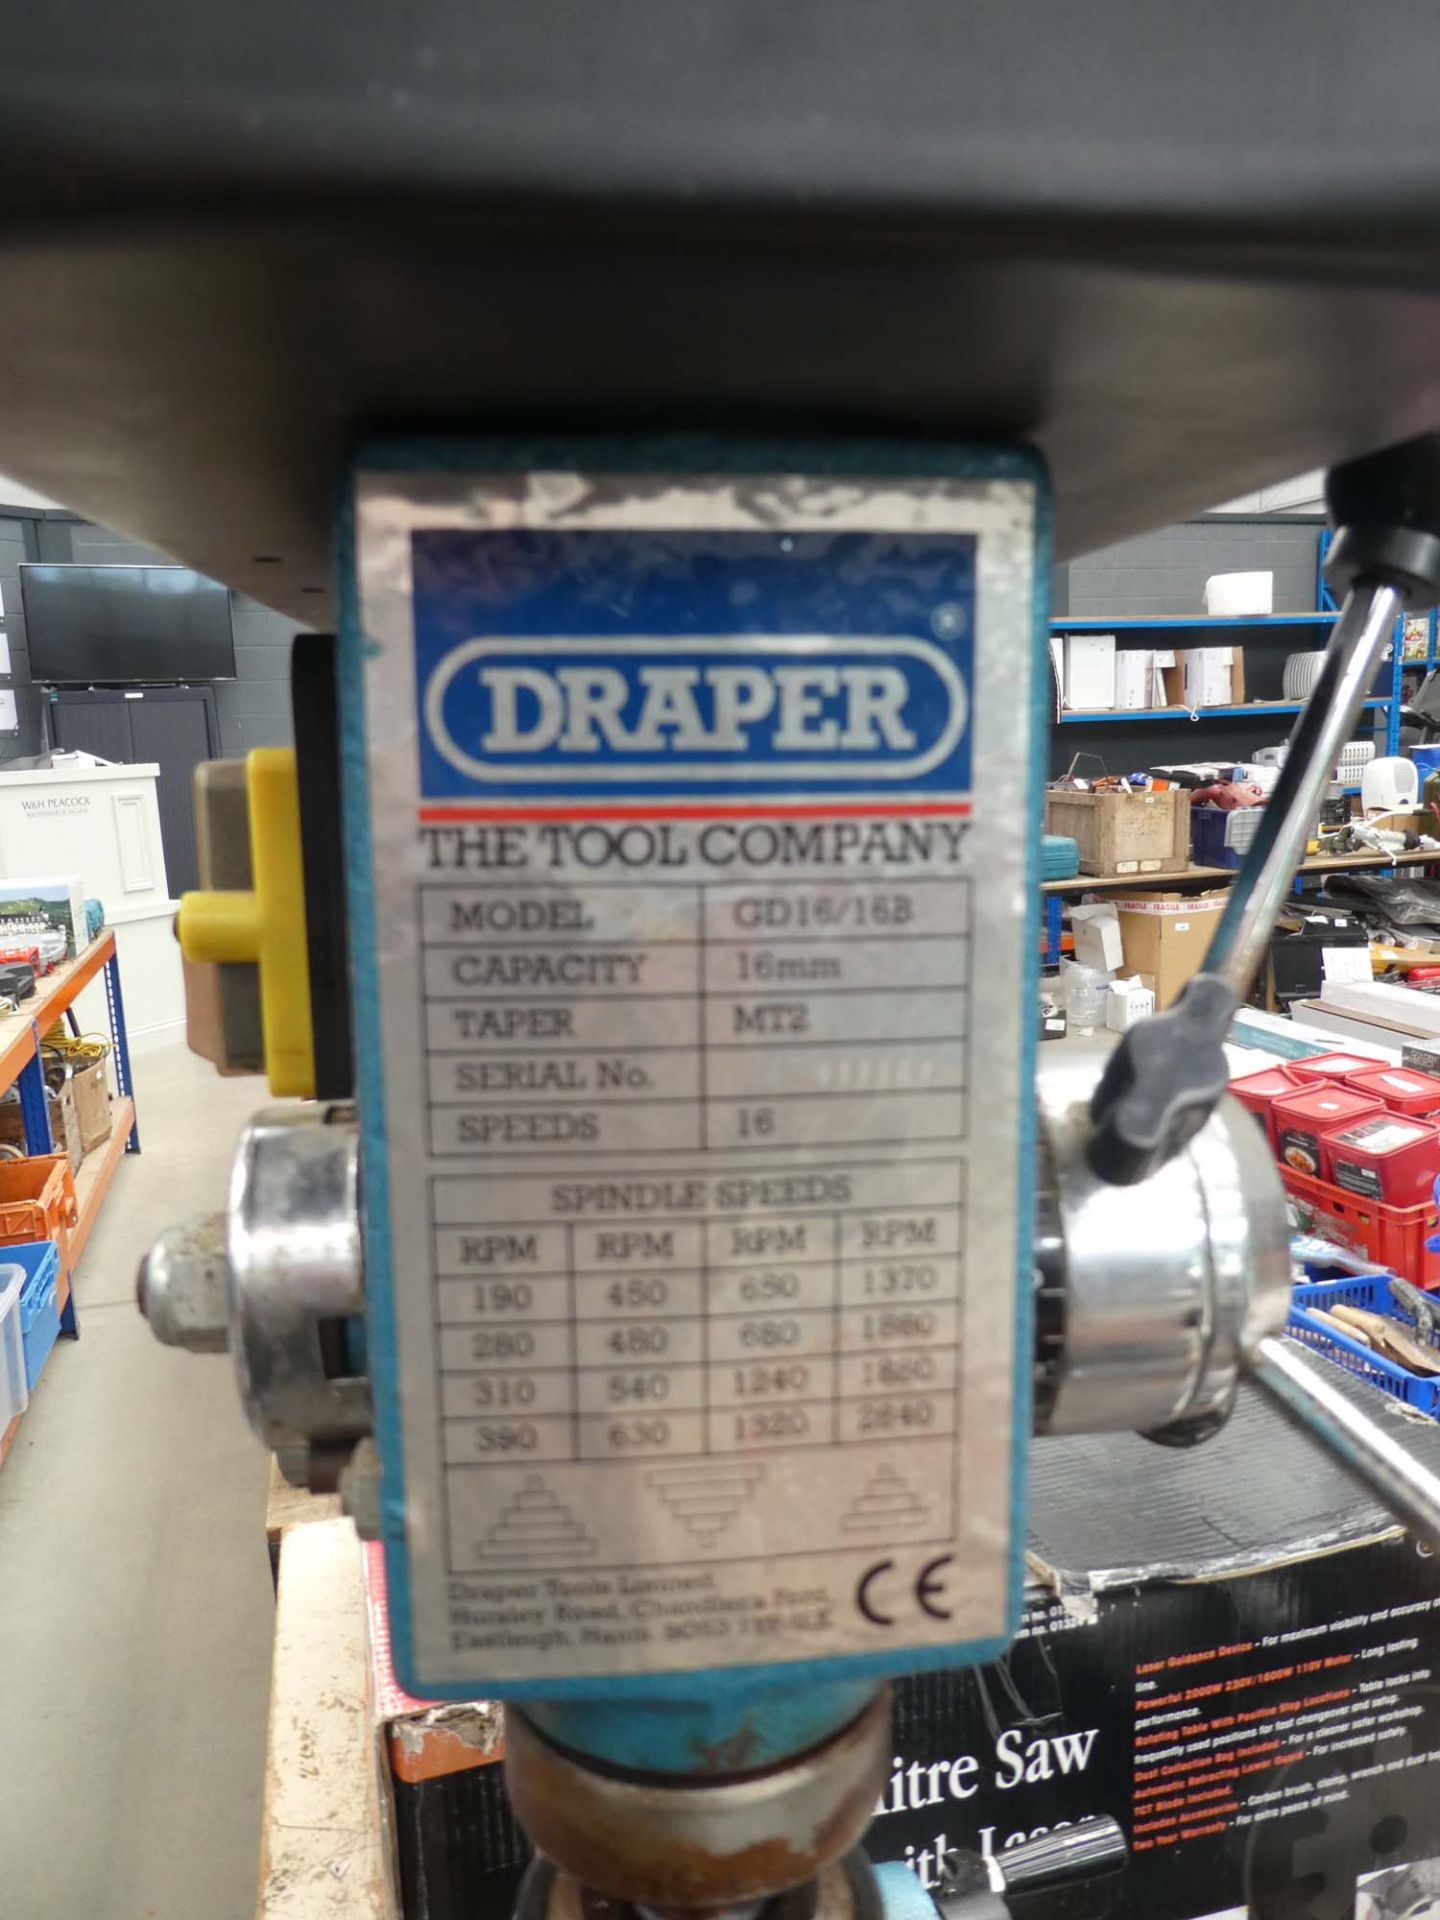 Draper pillar drill - Image 2 of 2